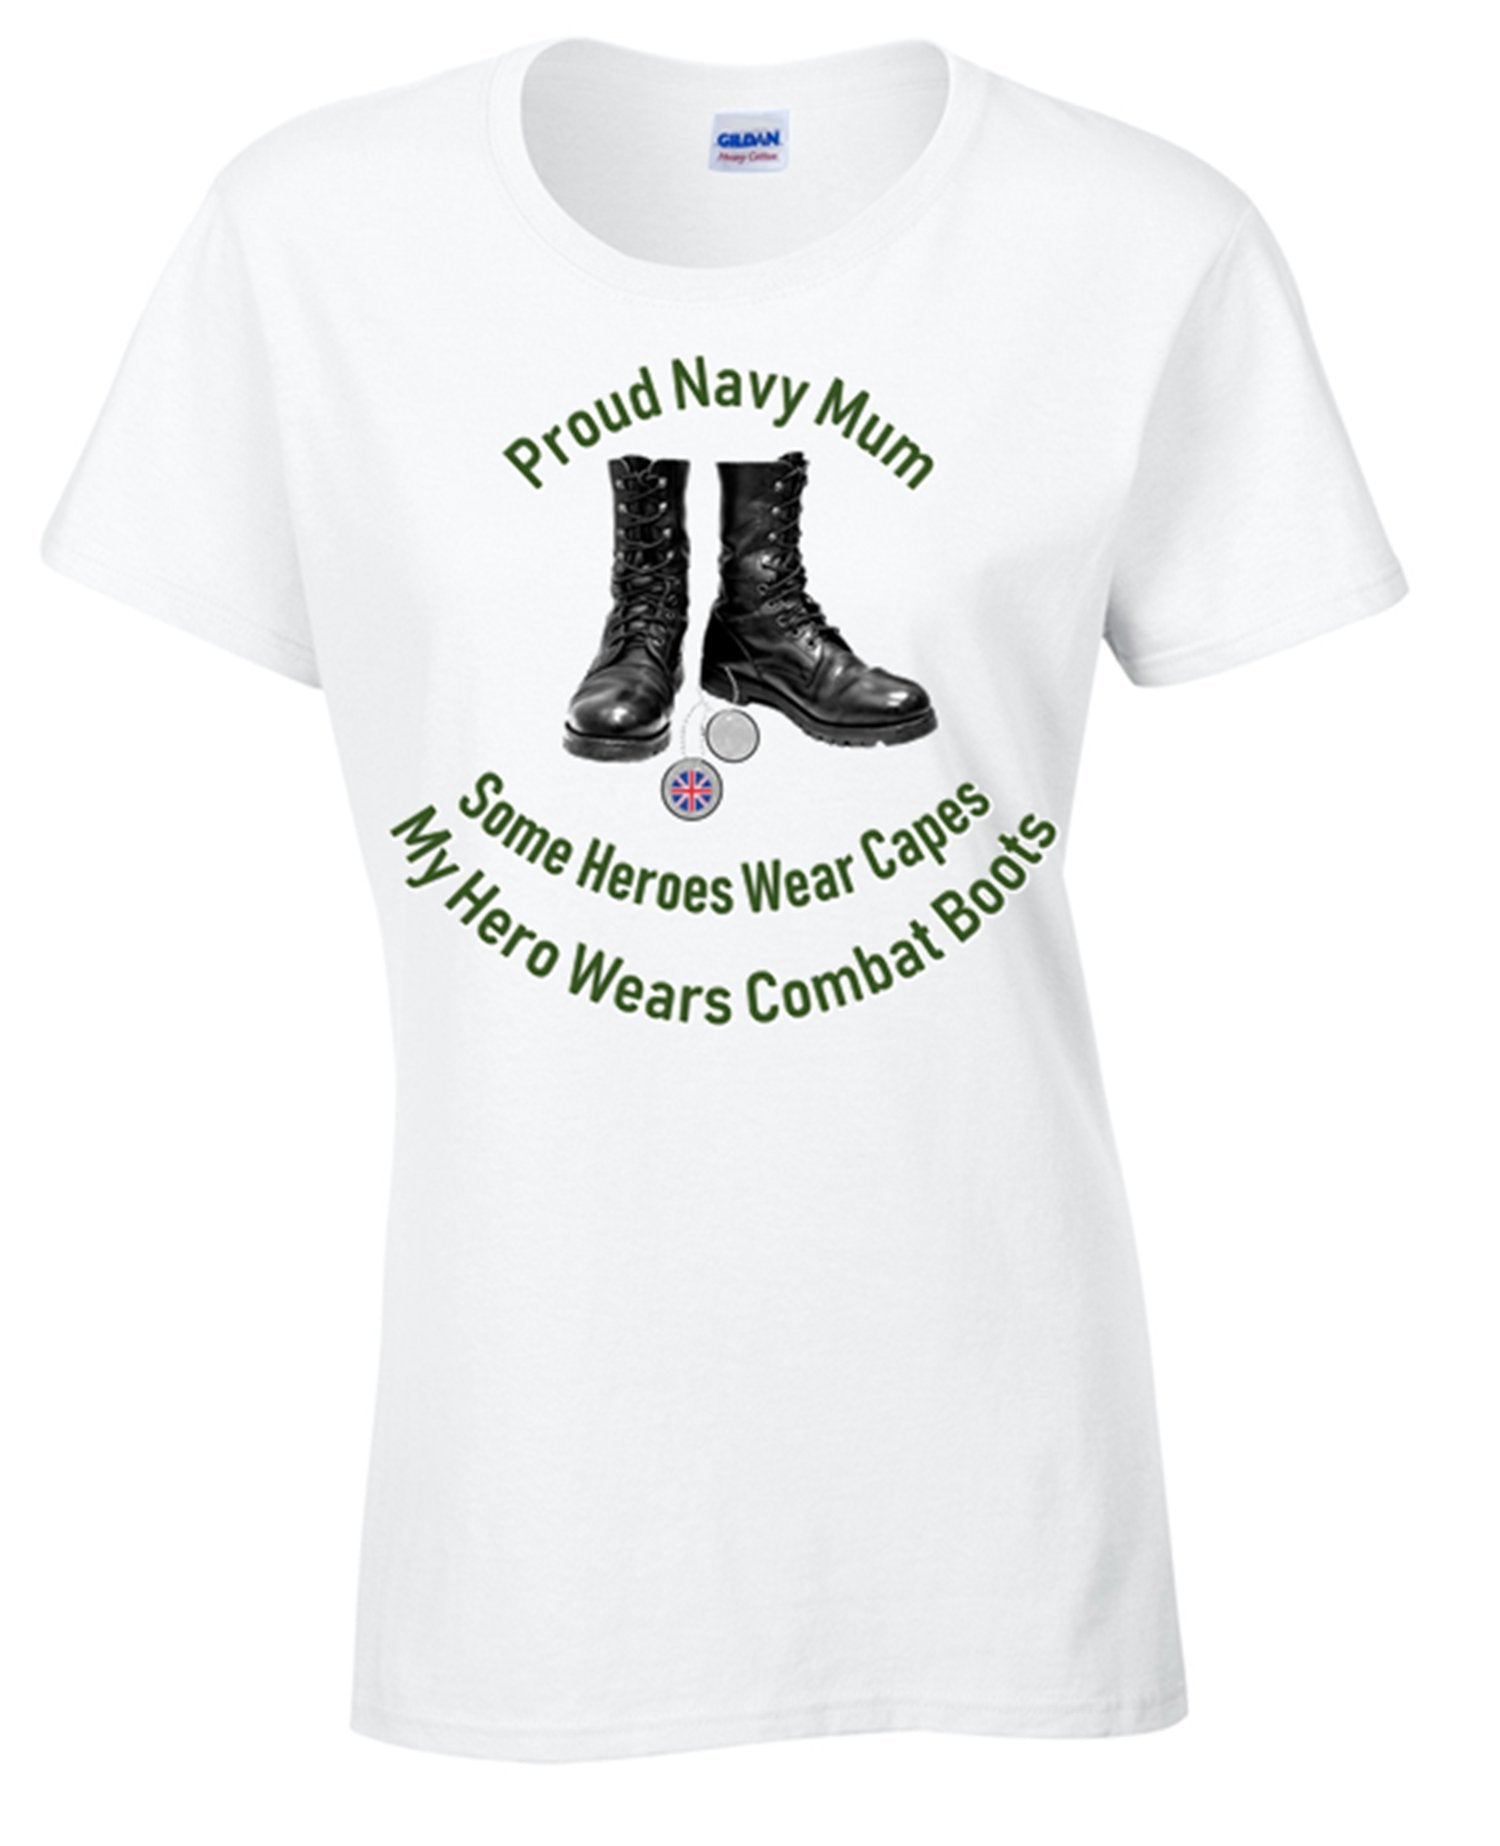 Bear Essentials Clothing Proud Navy Mum T-Shirt - Army 1157 kit White / S Army 1157 Kit